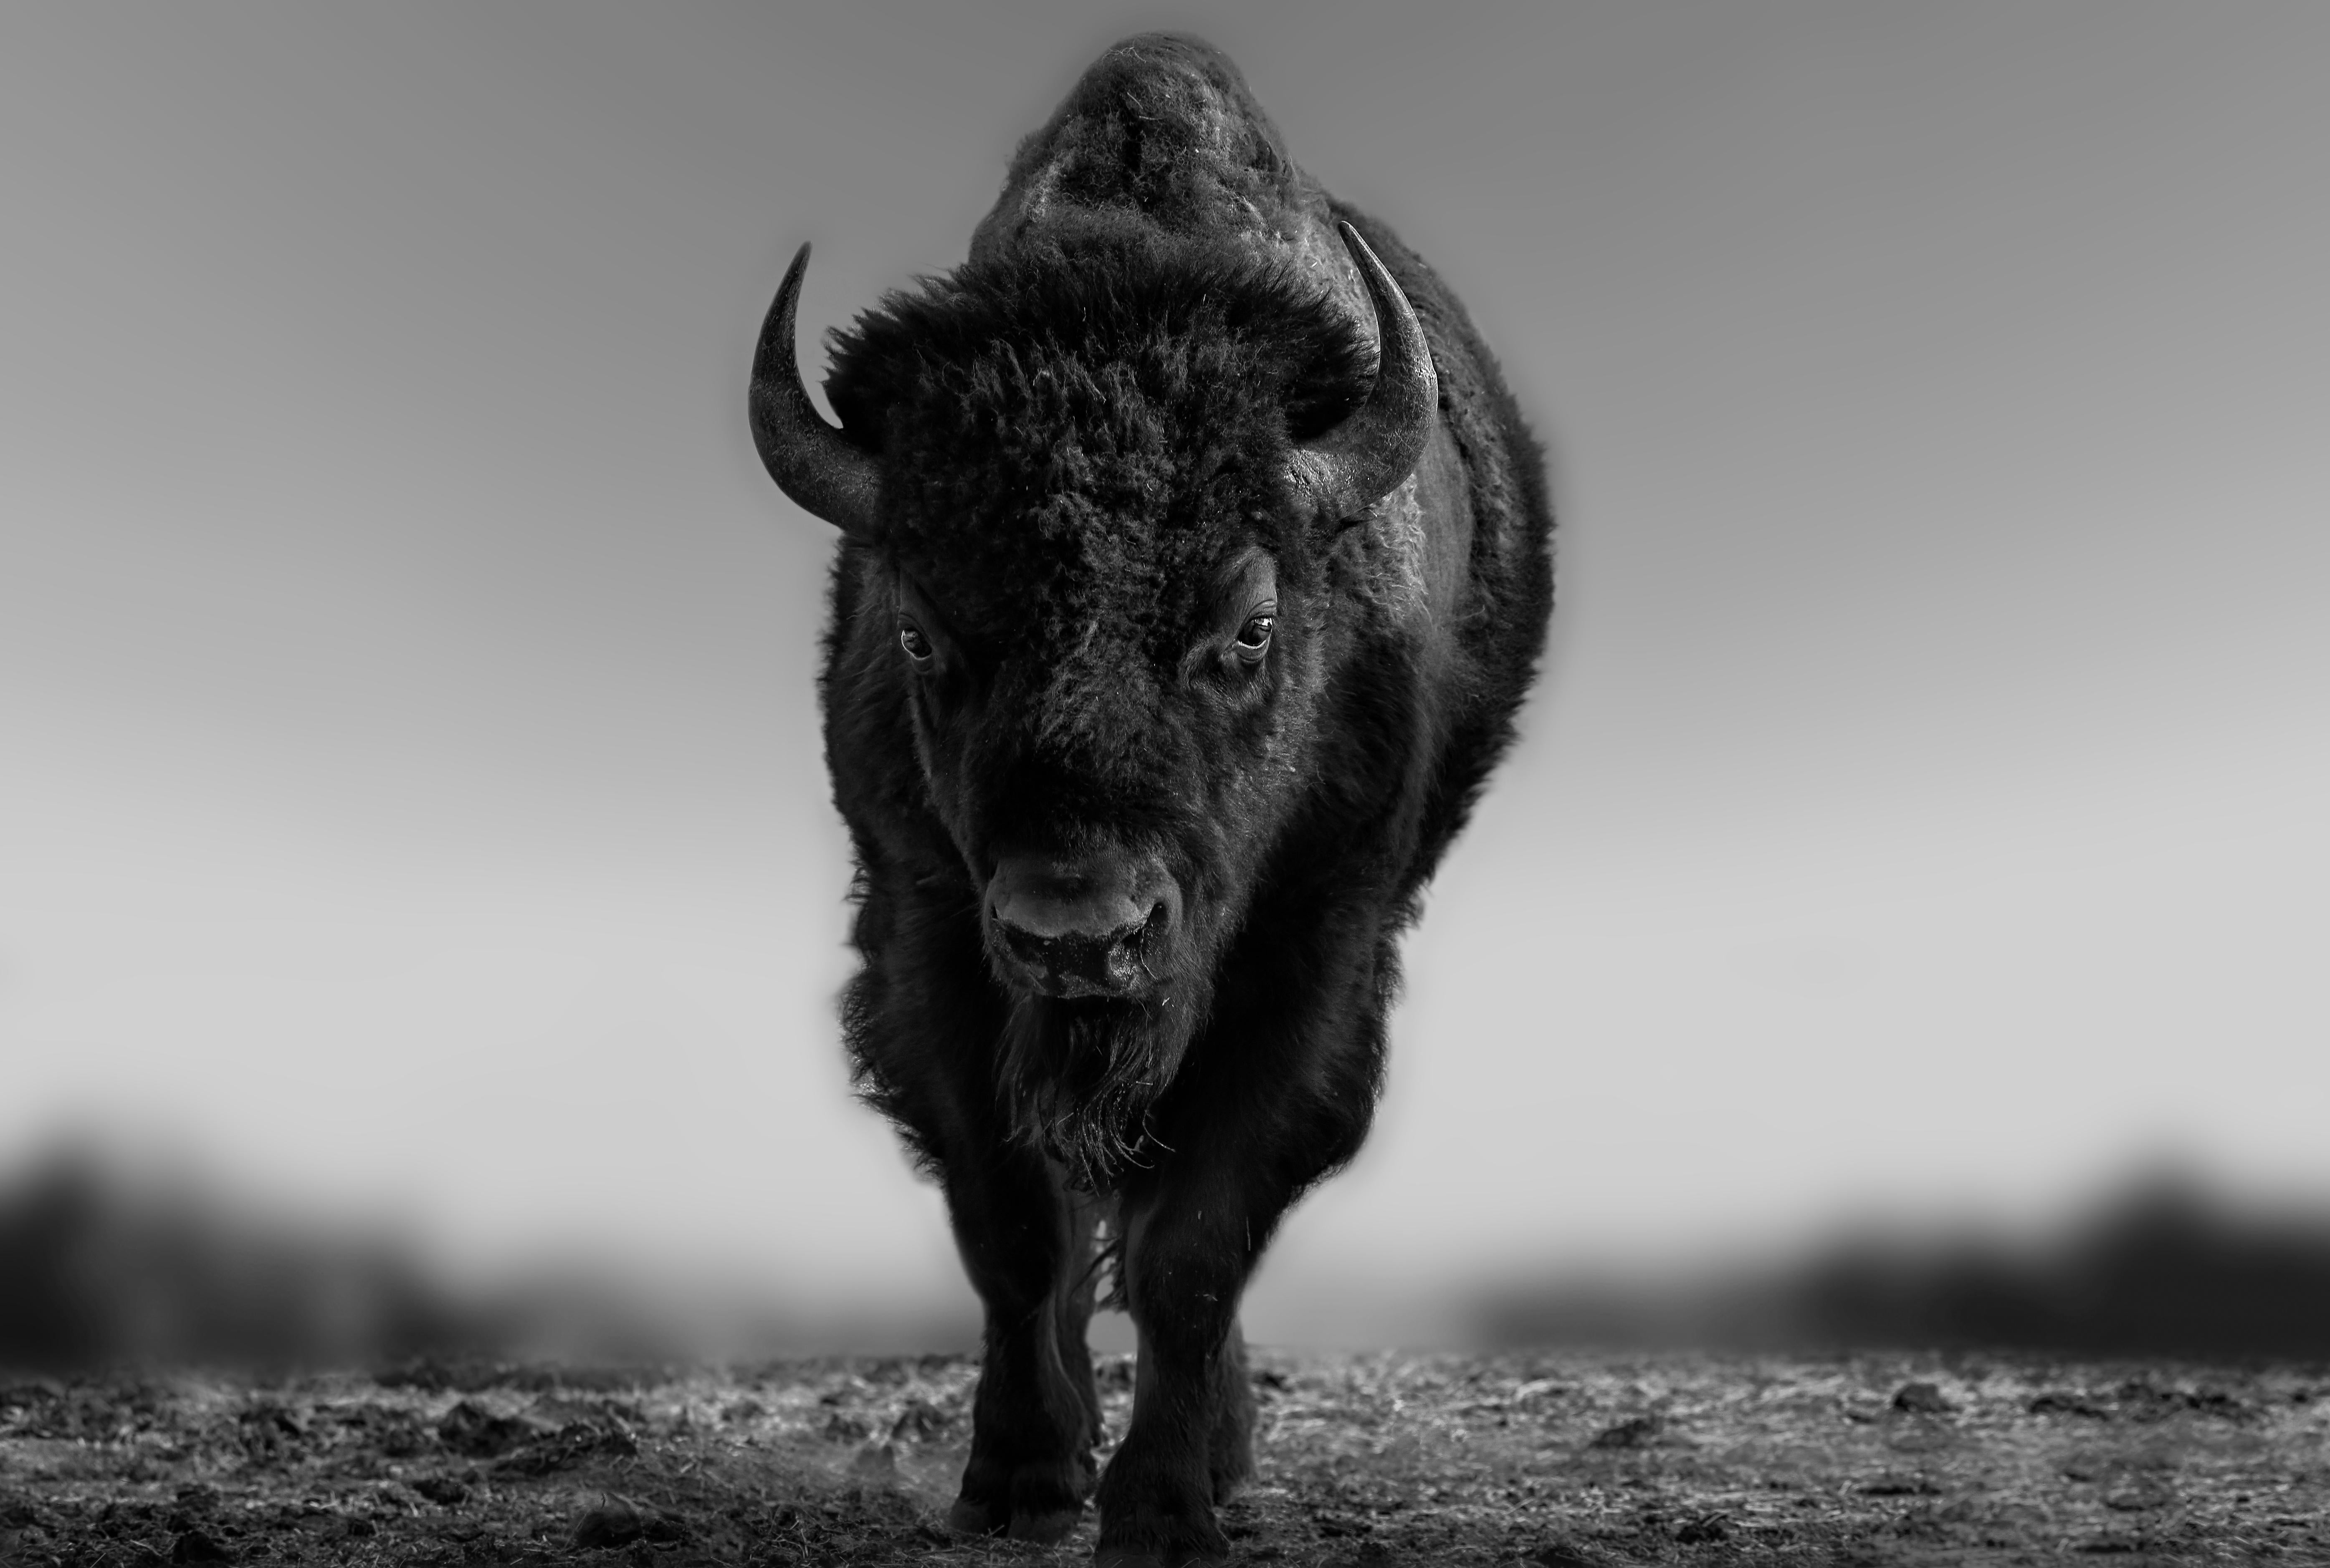 Shane Russeck Animal Print - The Beast 40x50  Black & White Photography Bison Buffalo Photograph Western Art